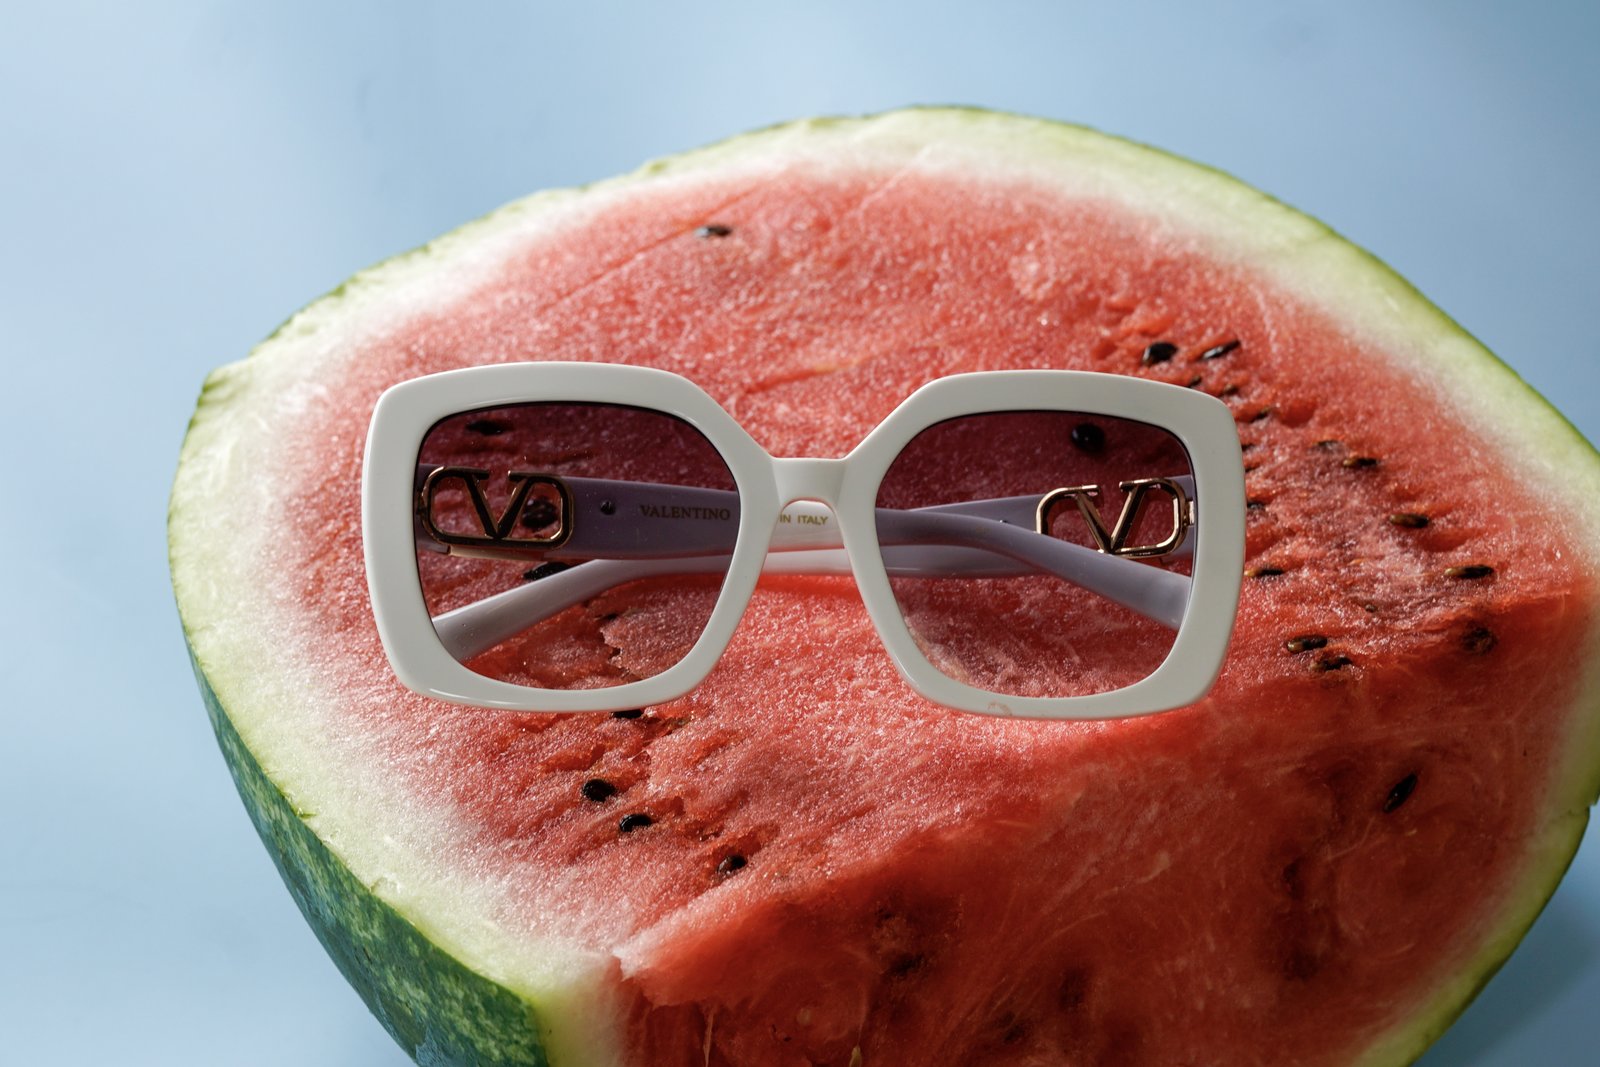 White Valentino sunglasses on top of a watermelon